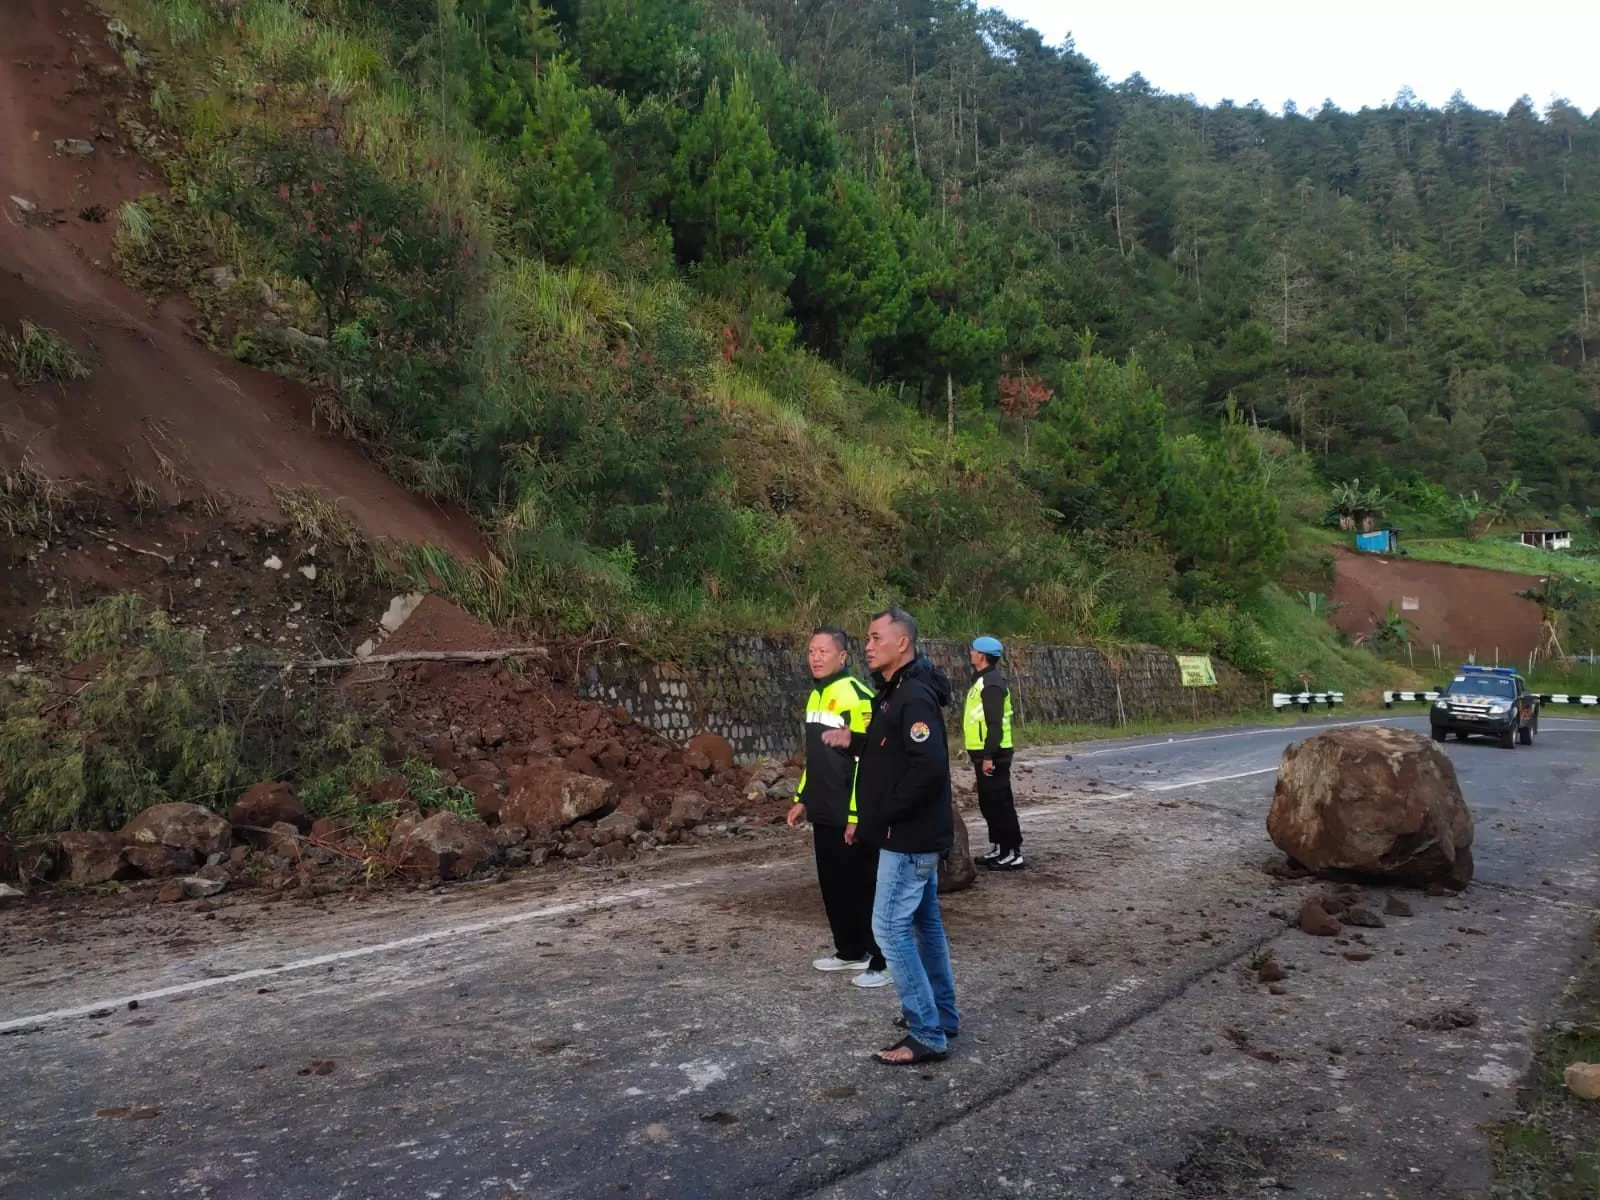 Longsor Di Jalur Tembus Tawangmangu Magetan Batuan Sebesar Motor Tutup Akses Jalan Krjogja 2853